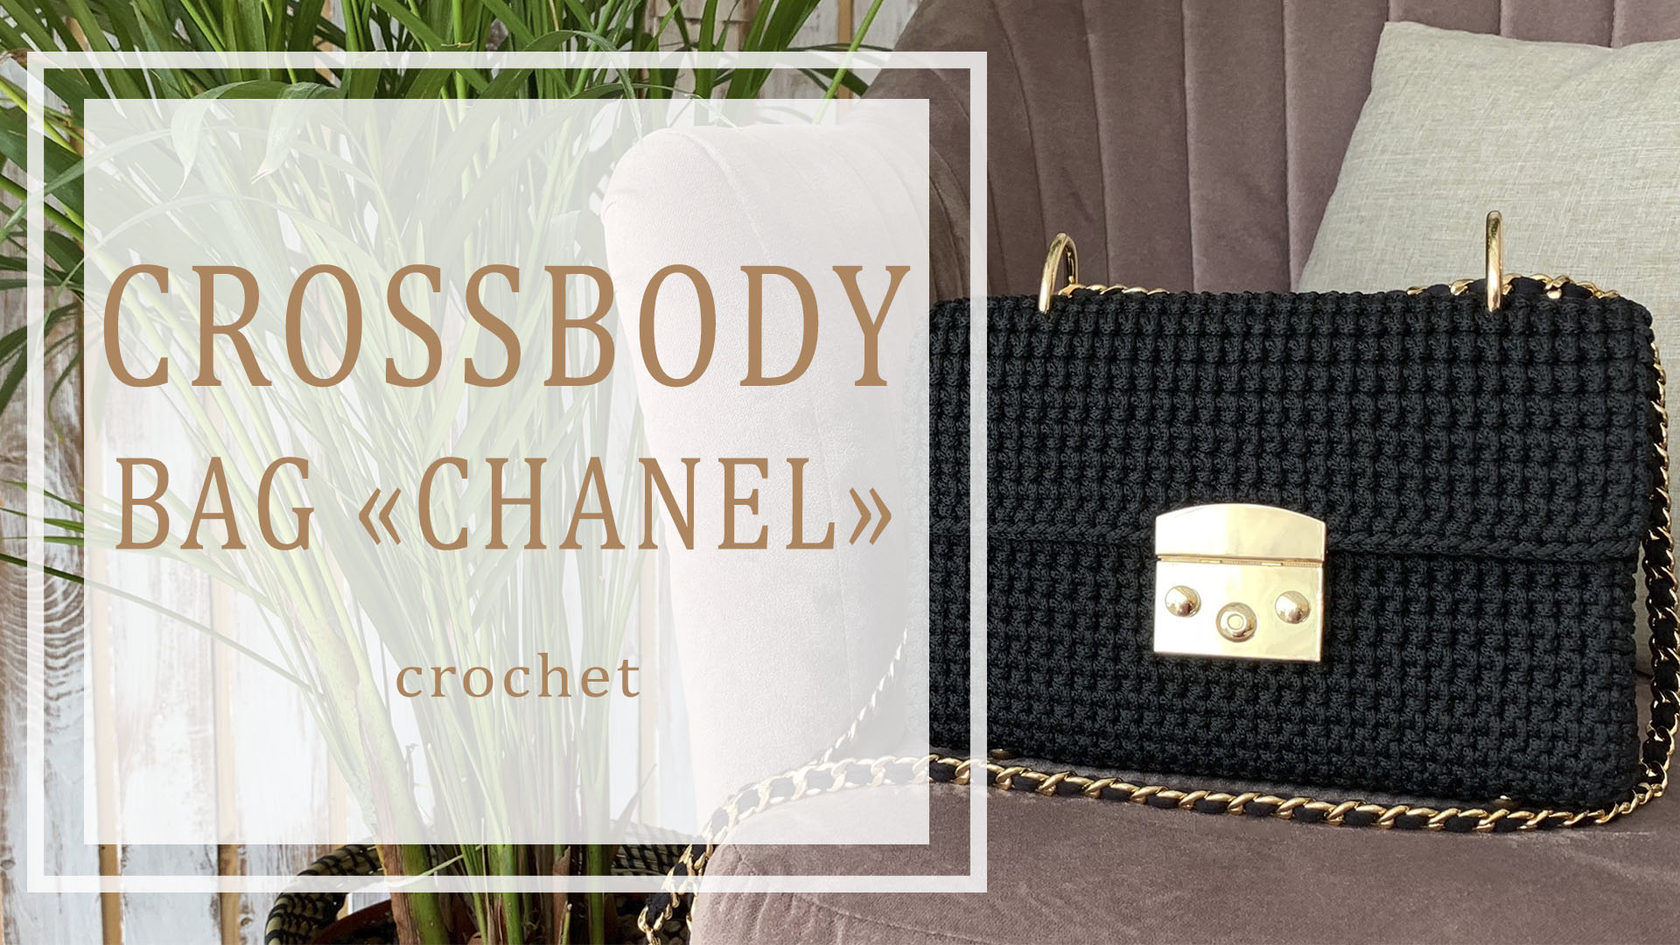 Buy MC crossbody Chanel